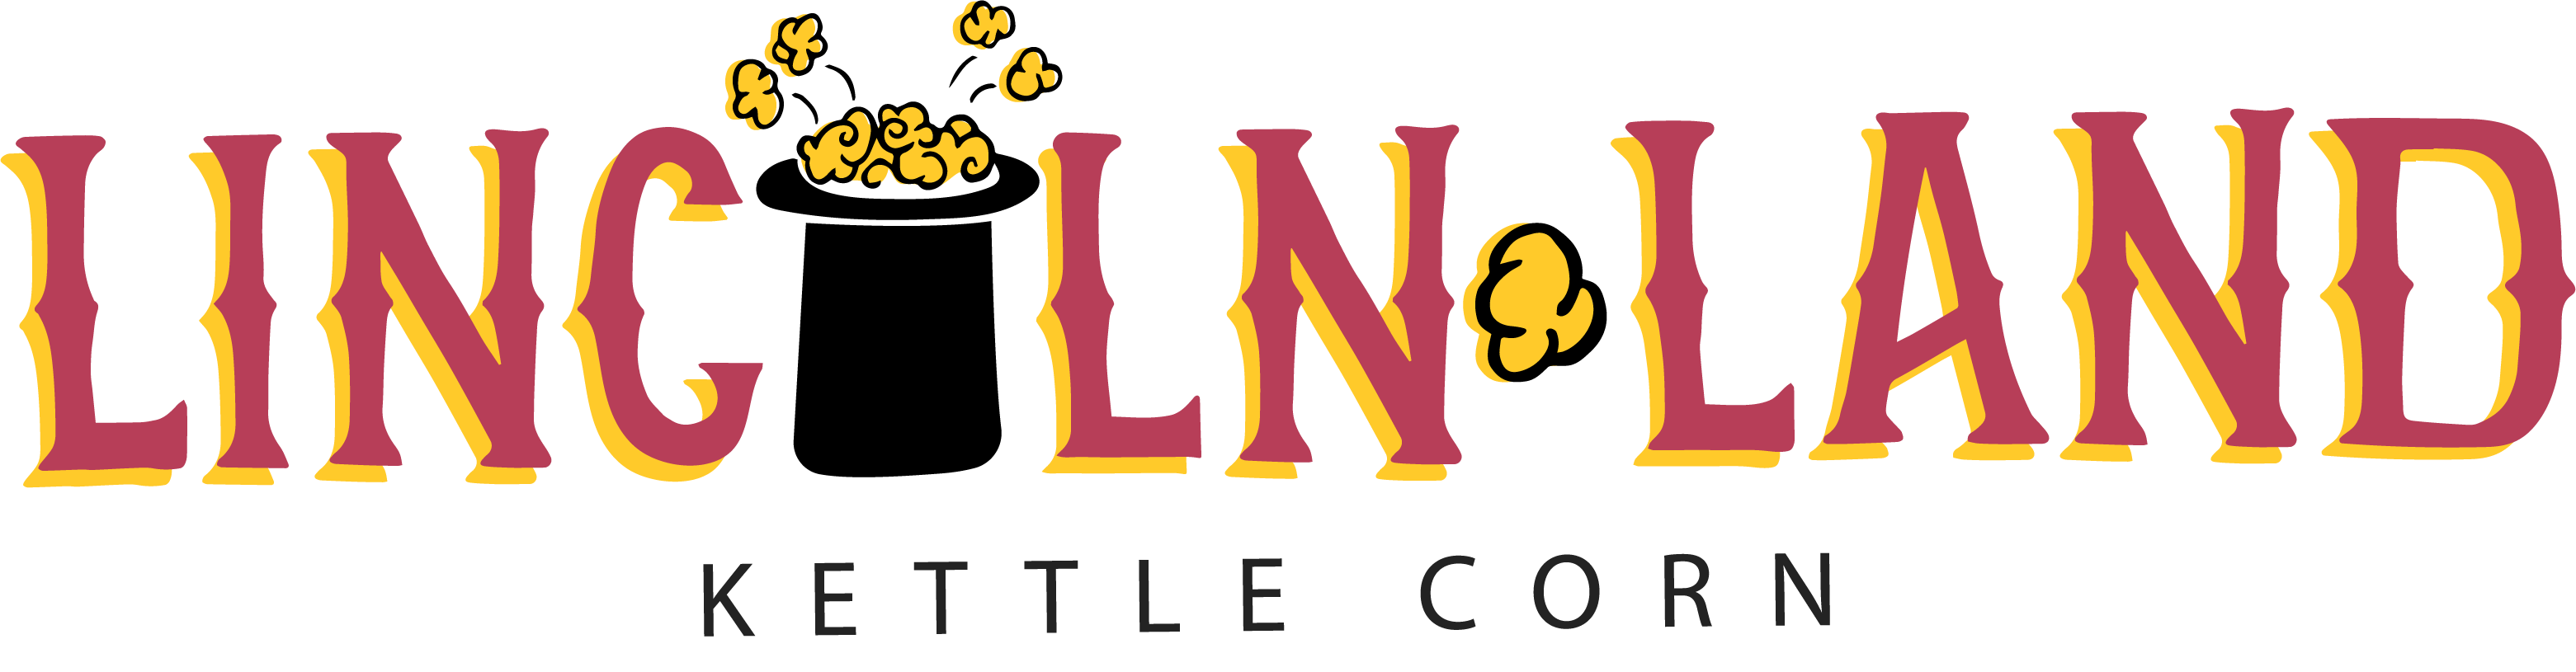 Hand Popped Kettle Corn – Lincoln Land Kettle Corn